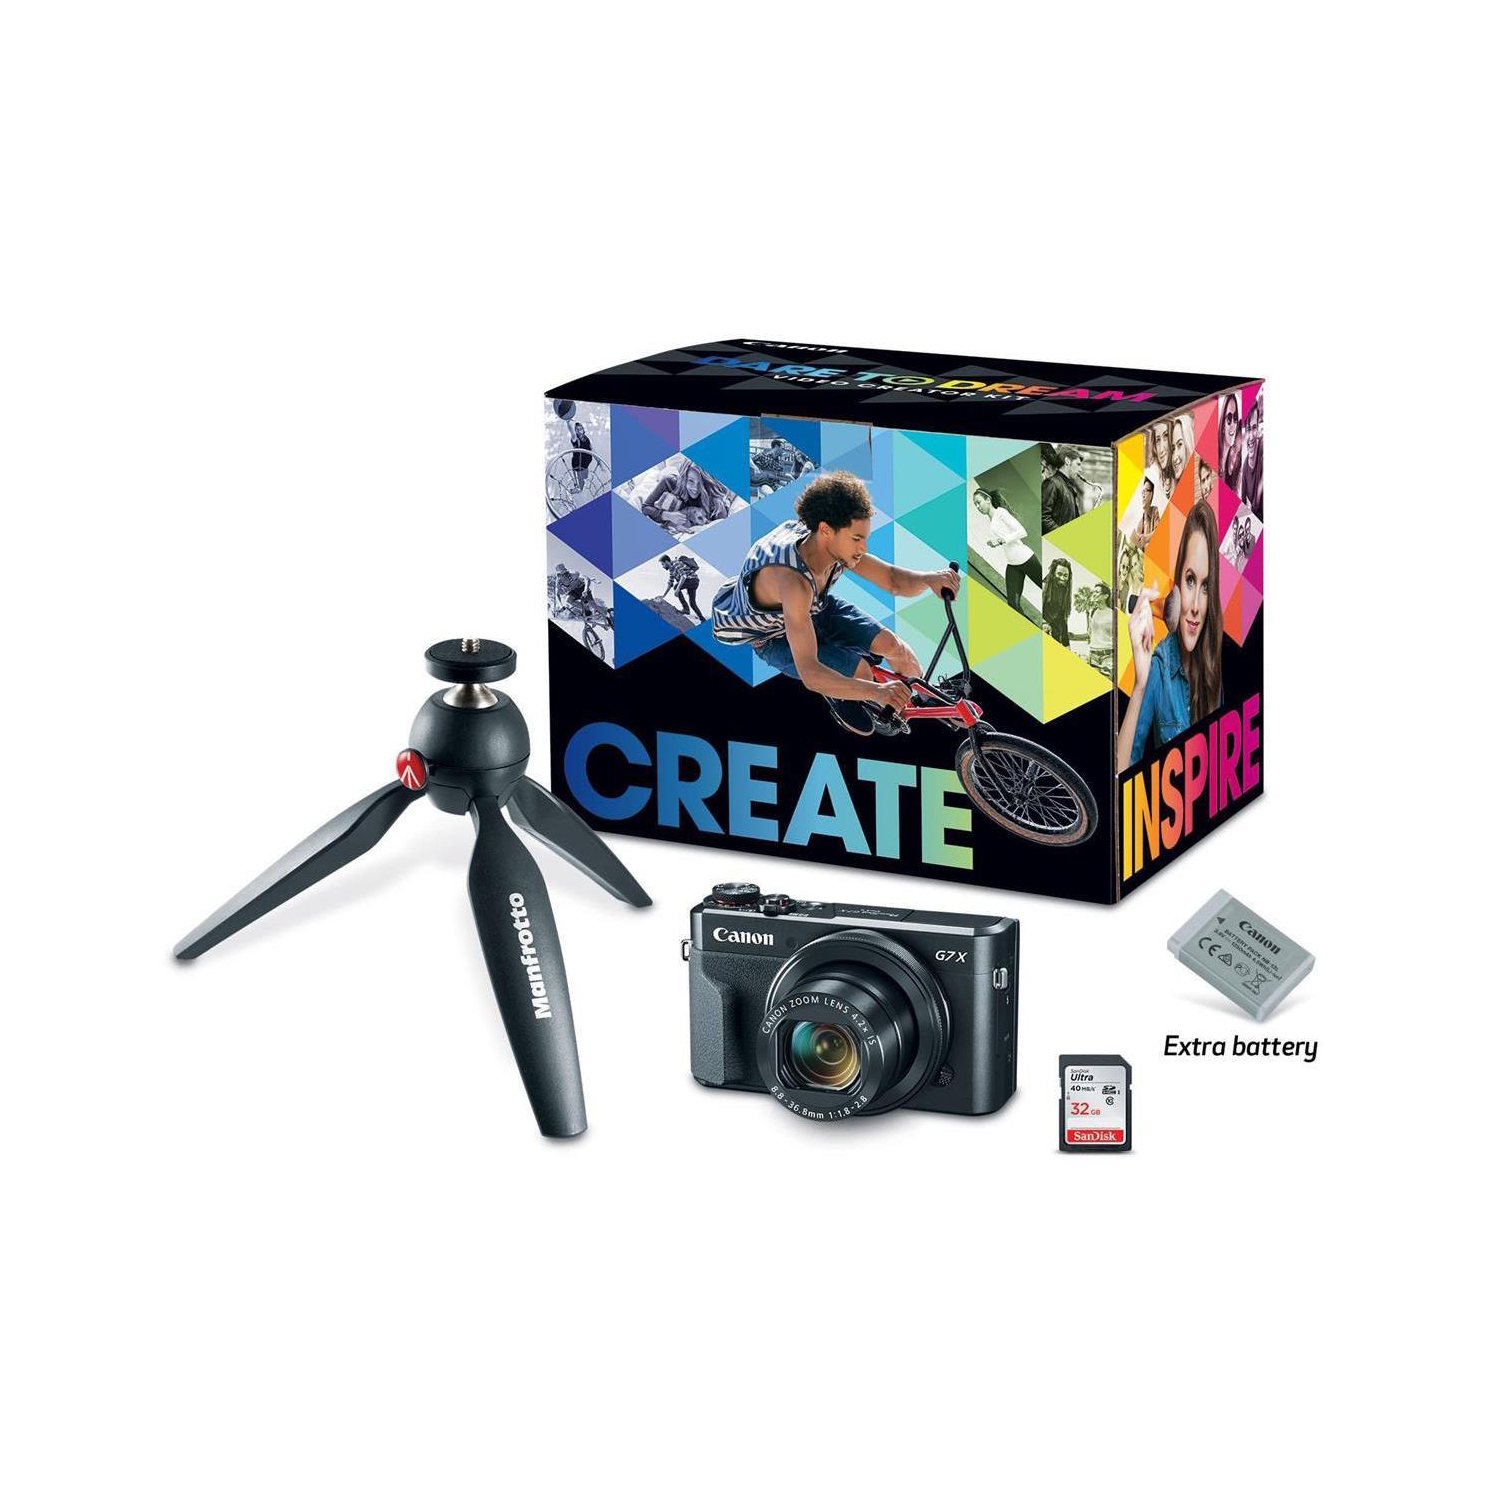 Canon PowerShot G7 X Mark II Digital Camera with Video Creator Kit - US Version w/ Seller Warranty